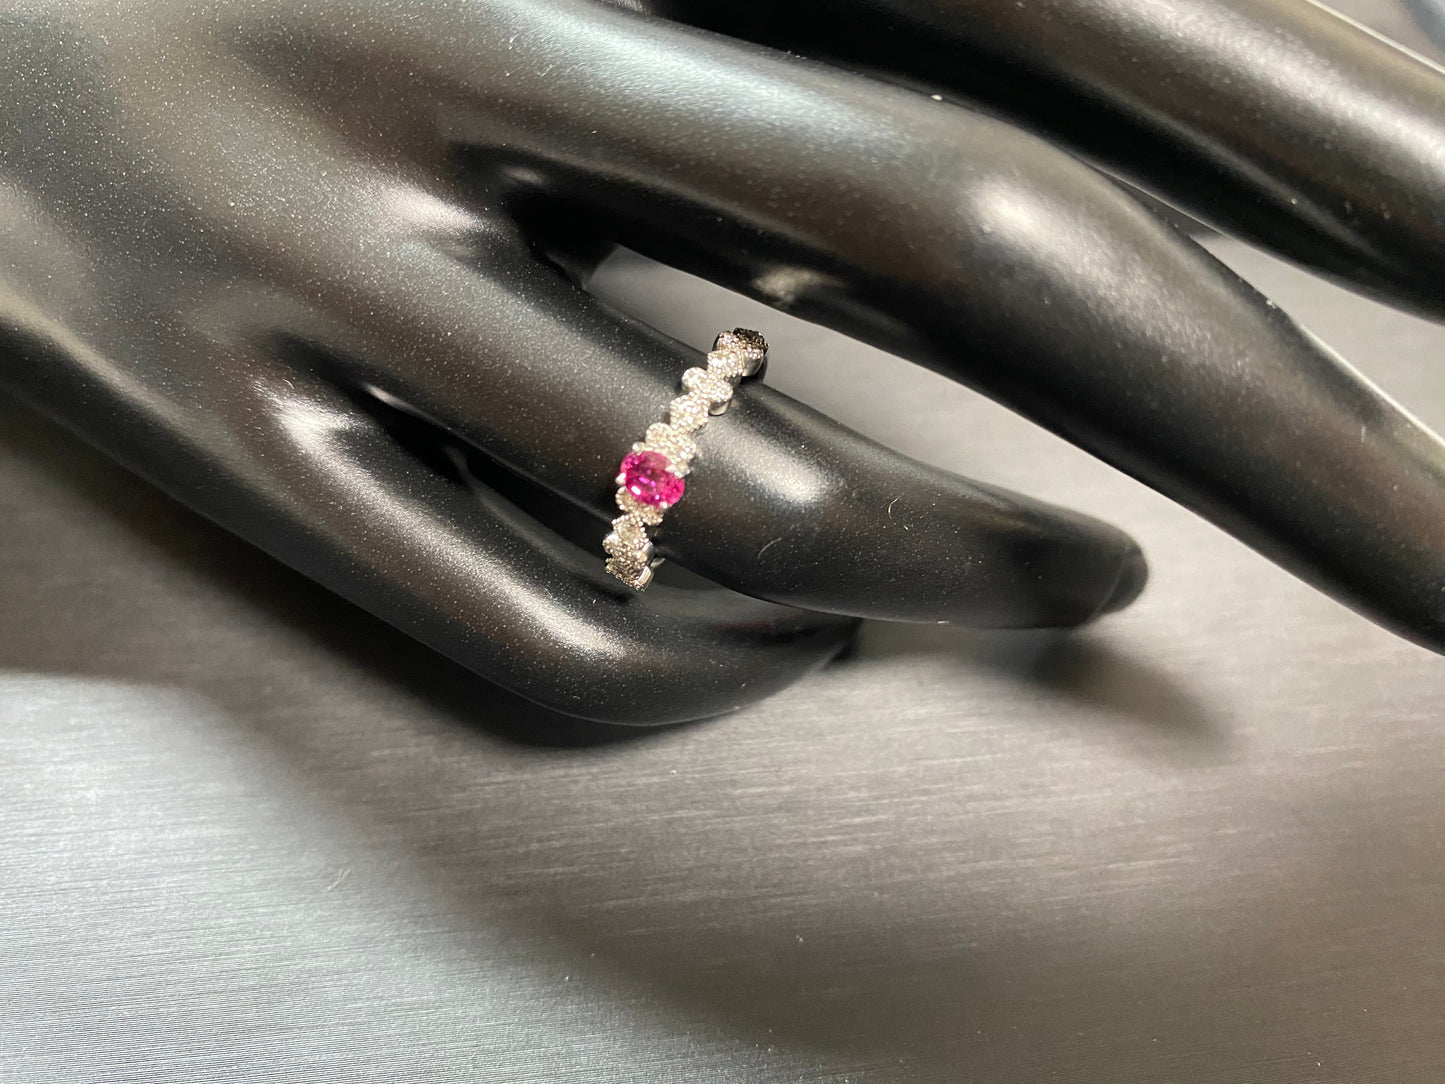 New] [Rare Stone] Ruby Ring Jewelry Pt900